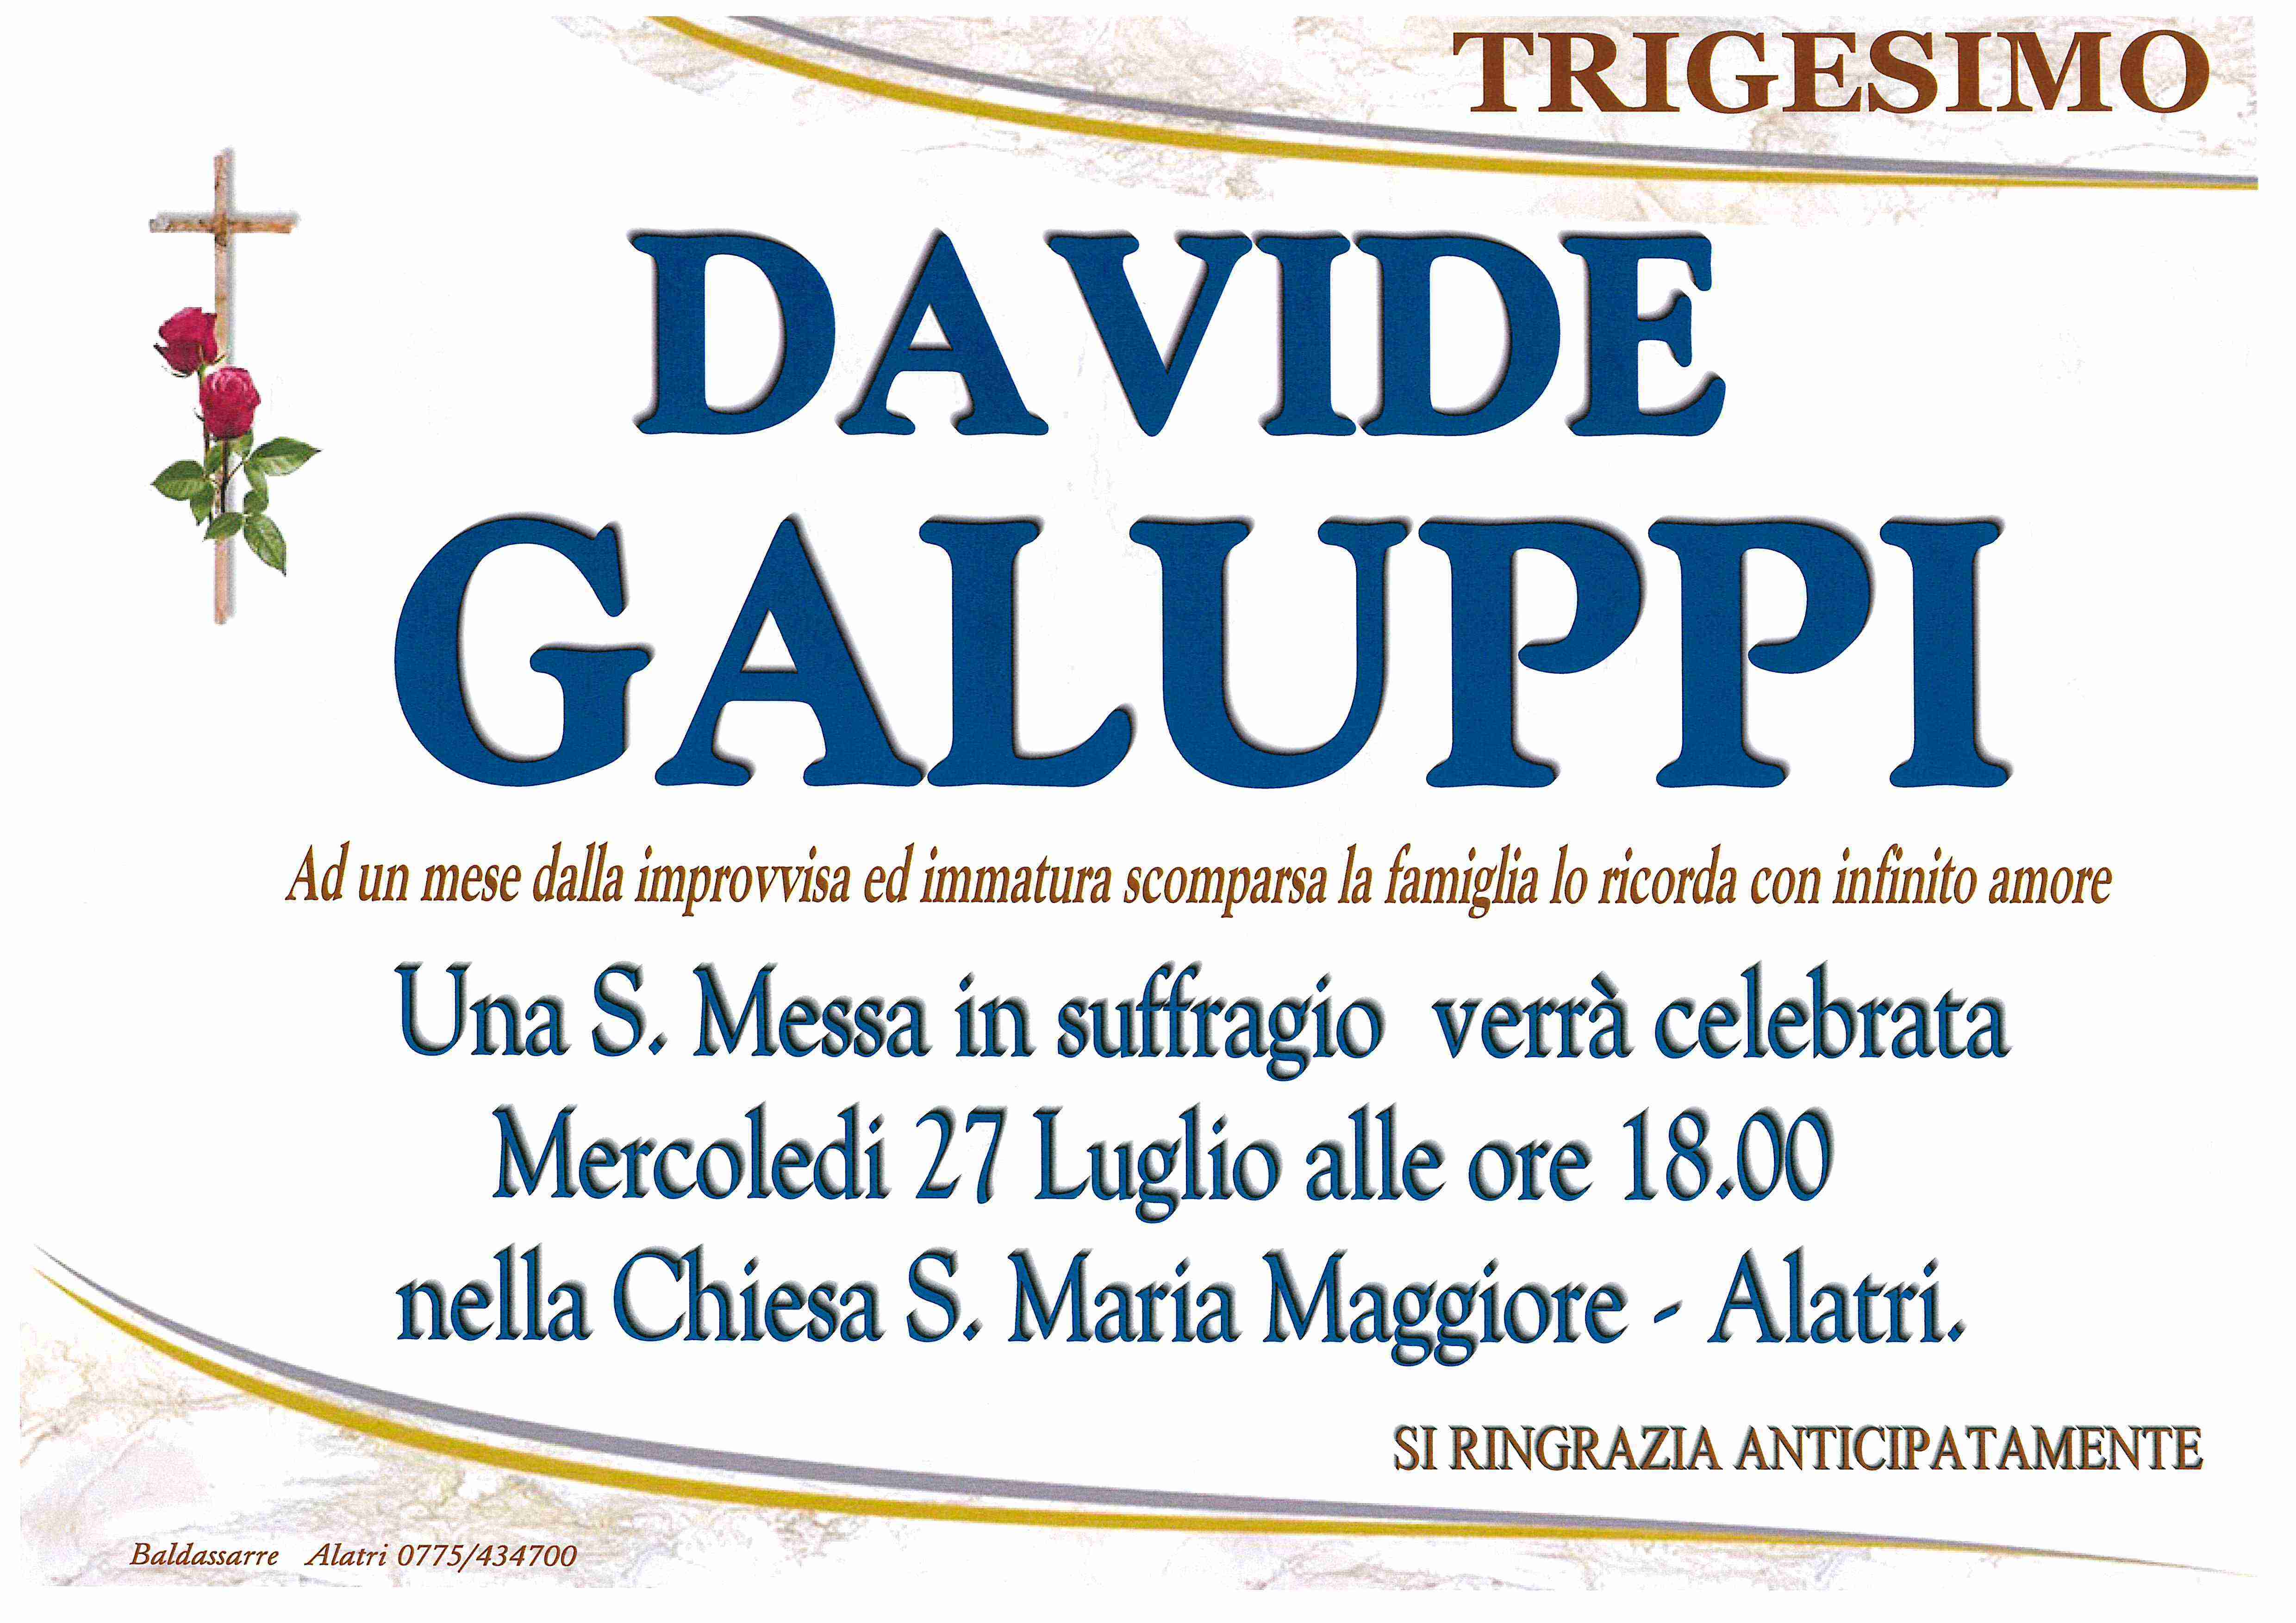 Davide Galuppi